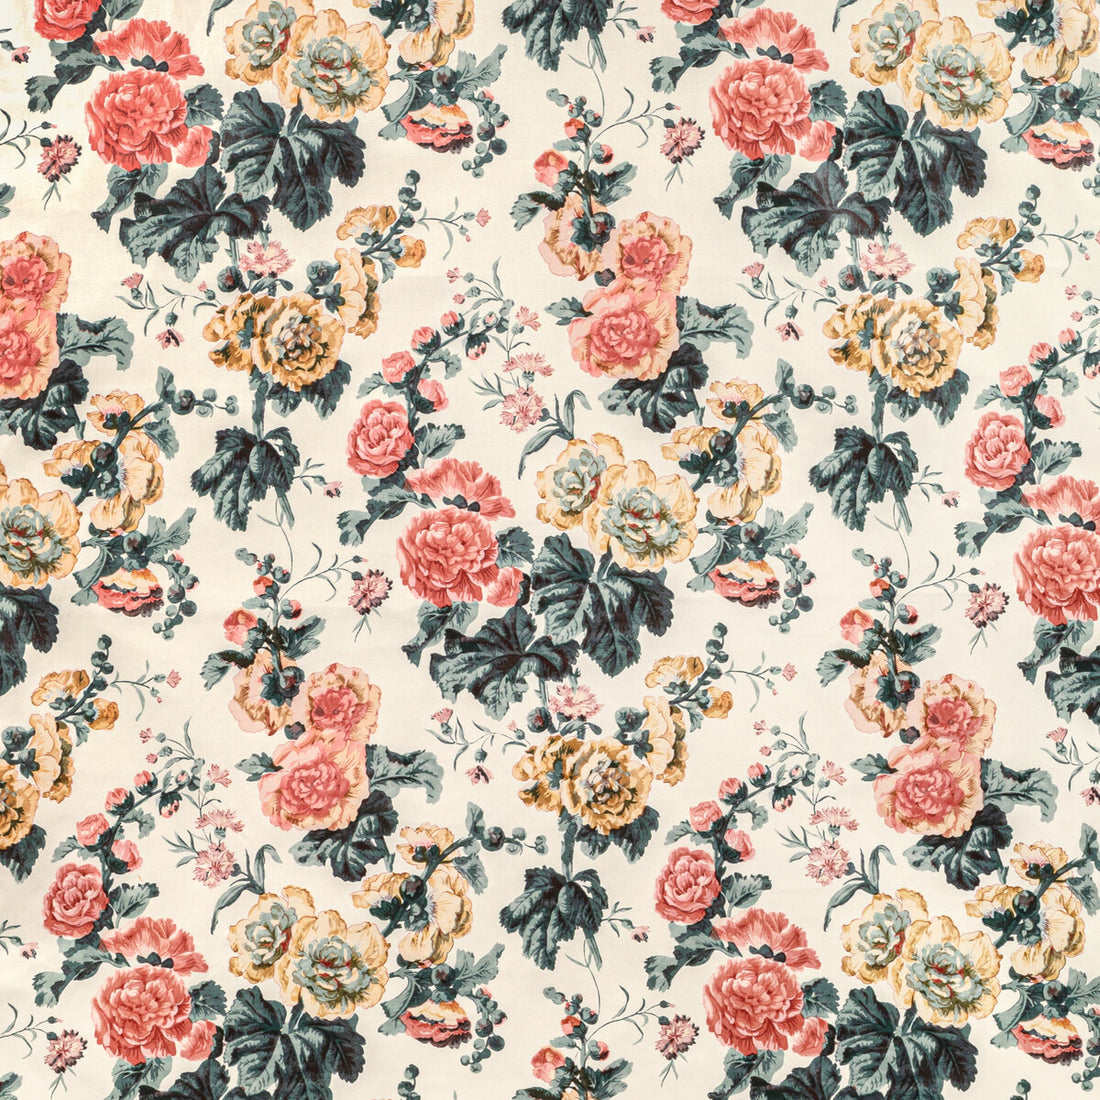 Upton Cotton fabric in tea/rose color - pattern 2020221.1617.0 - by Lee Jofa in the Oscar De La Renta IV collection